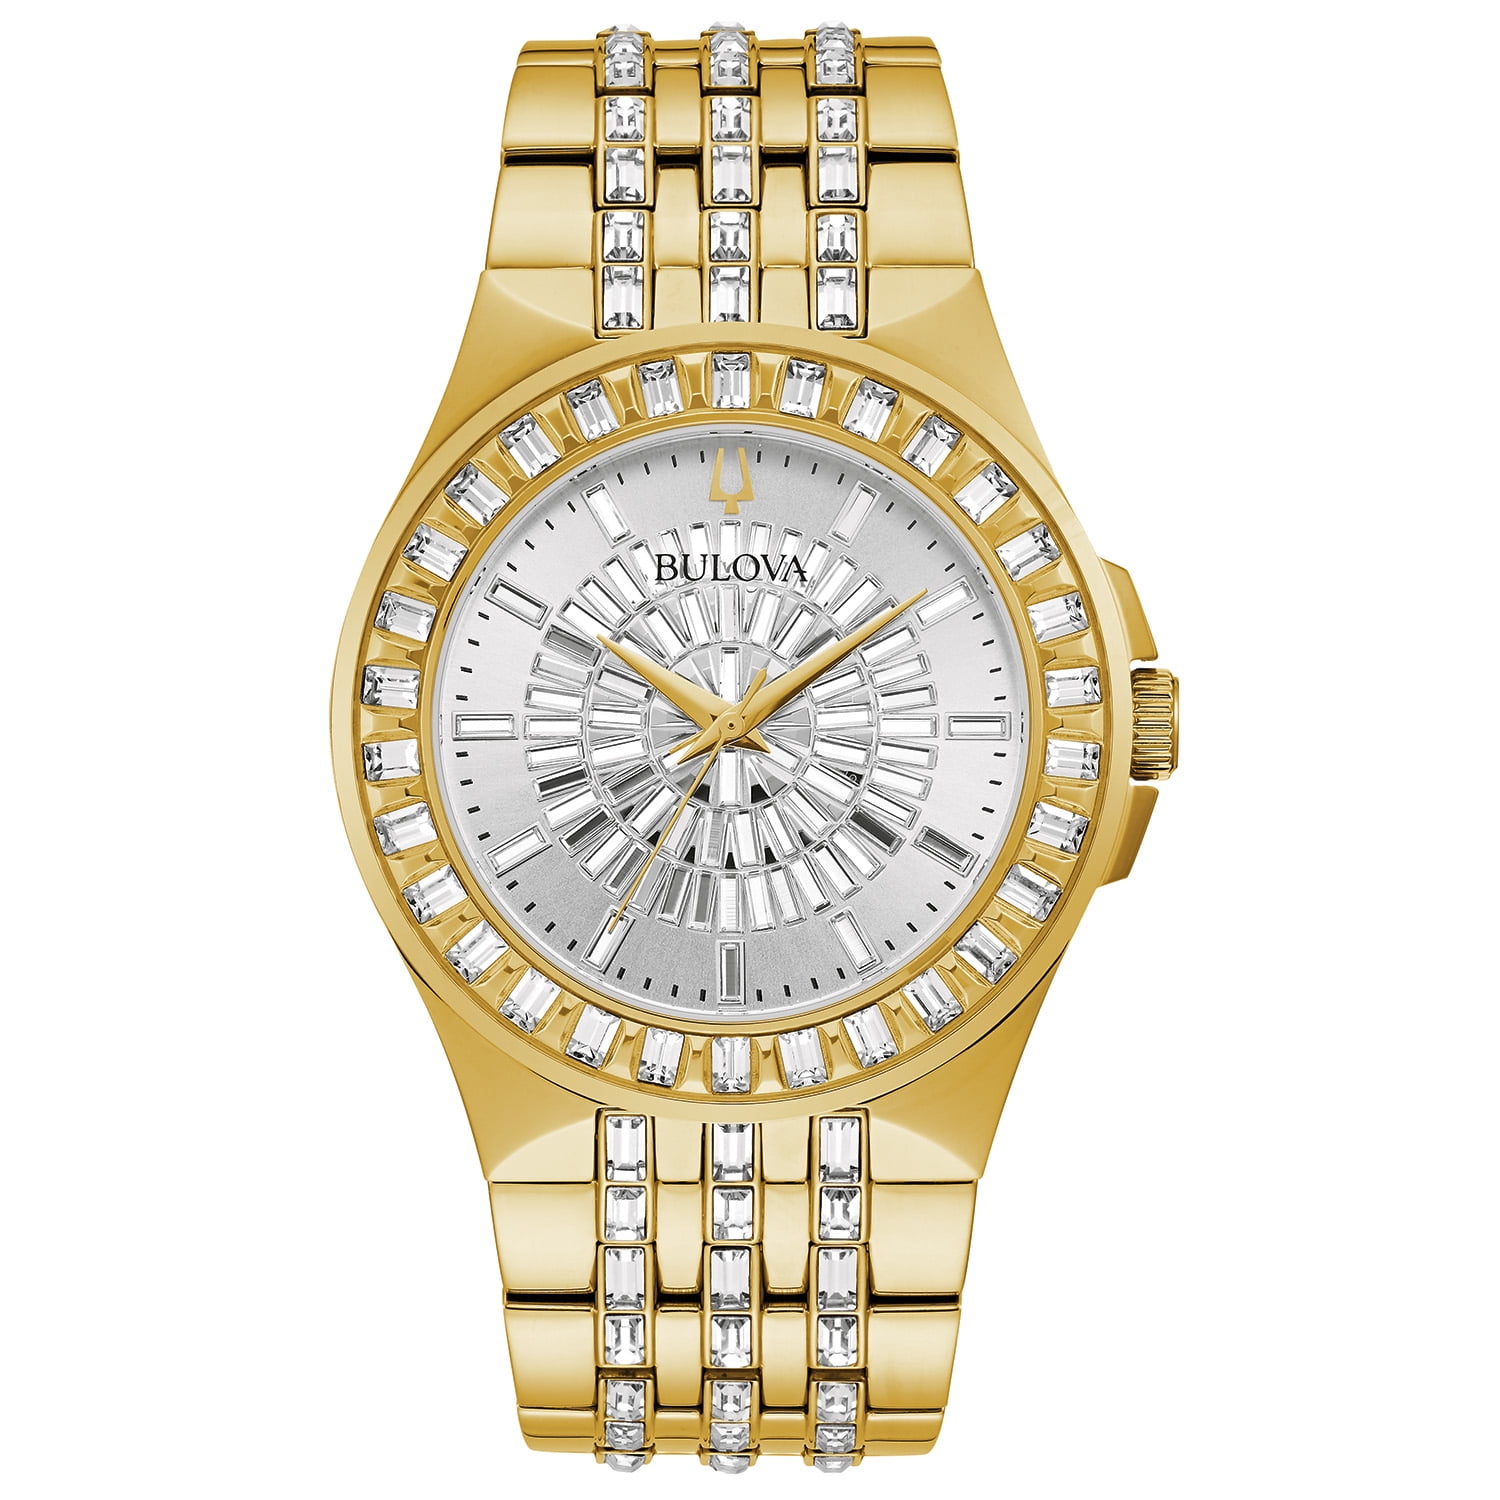 Bulova Men's Gold-Tone Crystal Watch 98A239 - Walmart.com